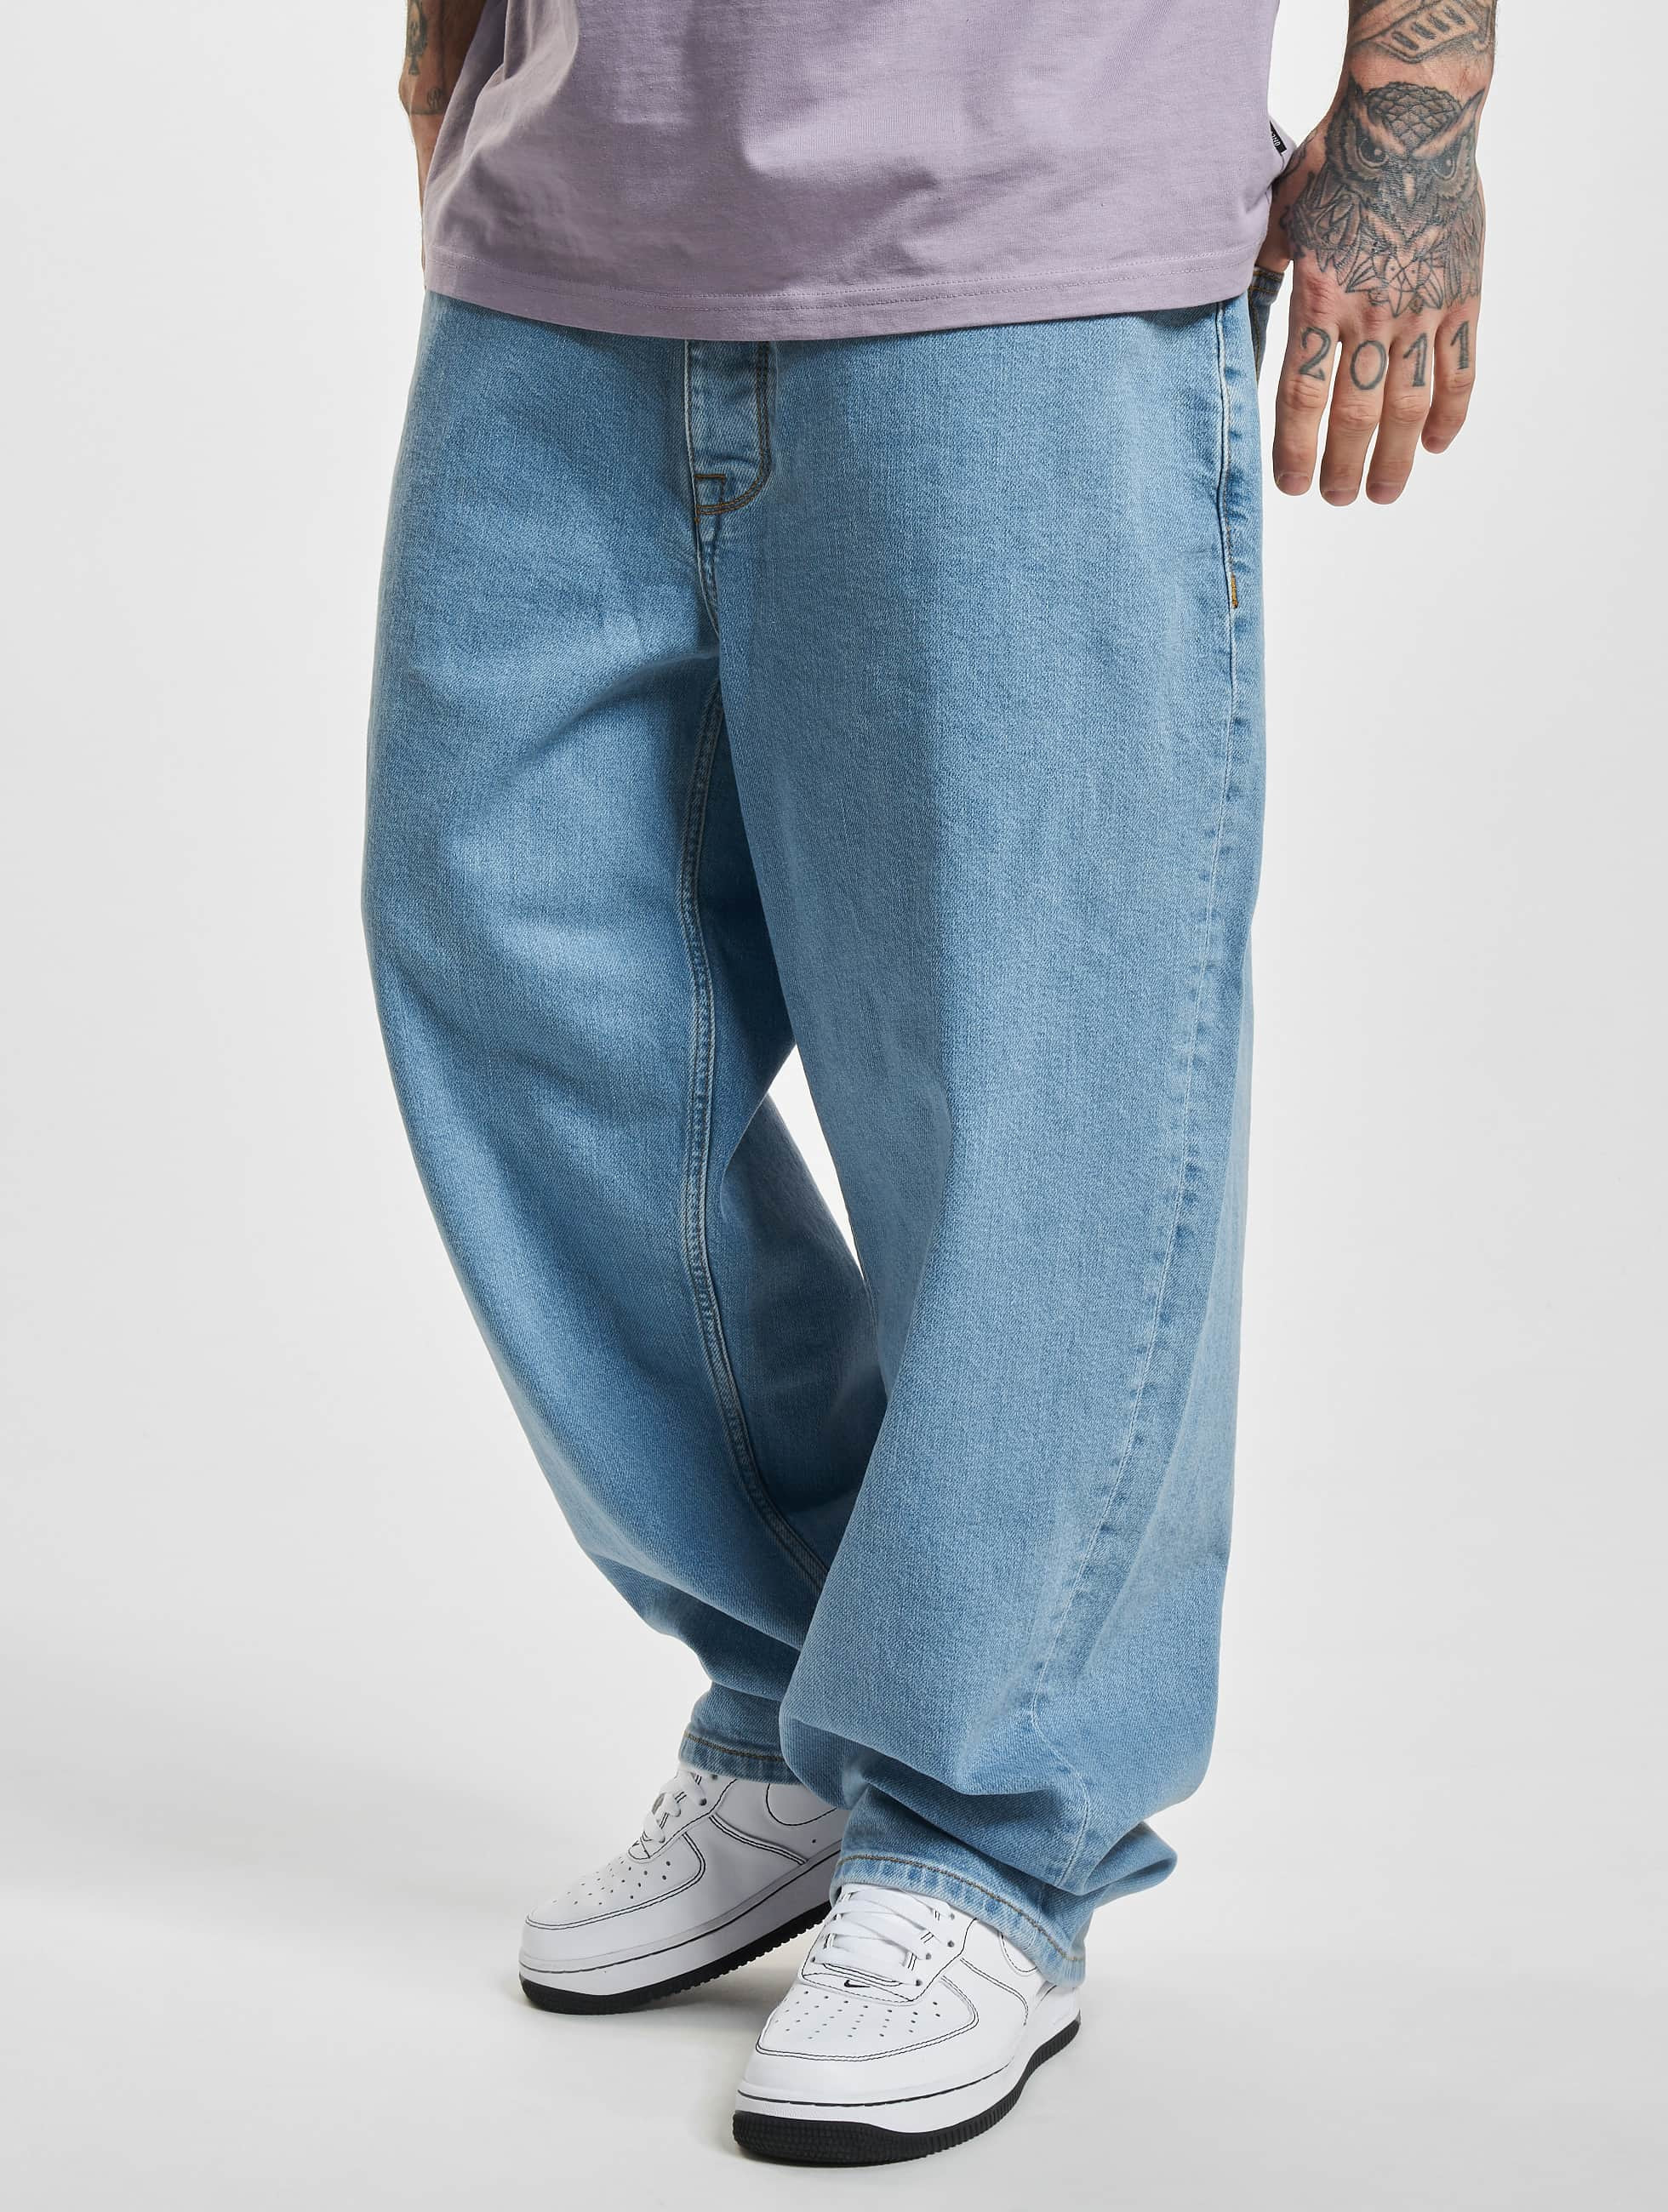 beschaving token Reis Homeboy Jeans / Baggy jeans X-Tra Monster in blauw 986009